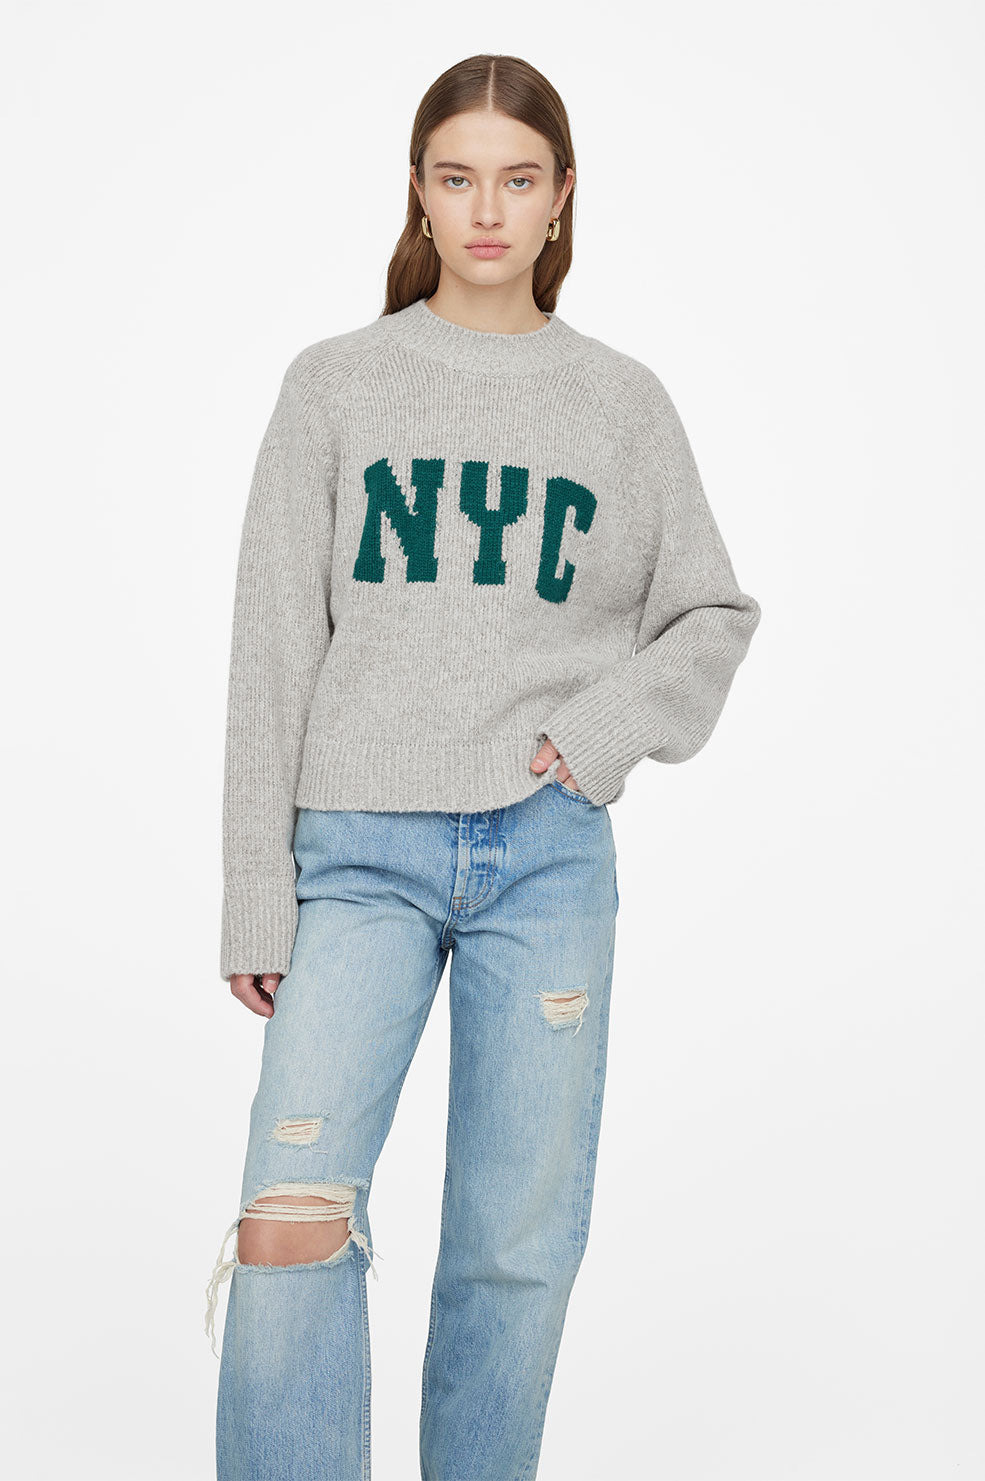 ANINE BING Kendrick Sweater University New York - Heather Grey